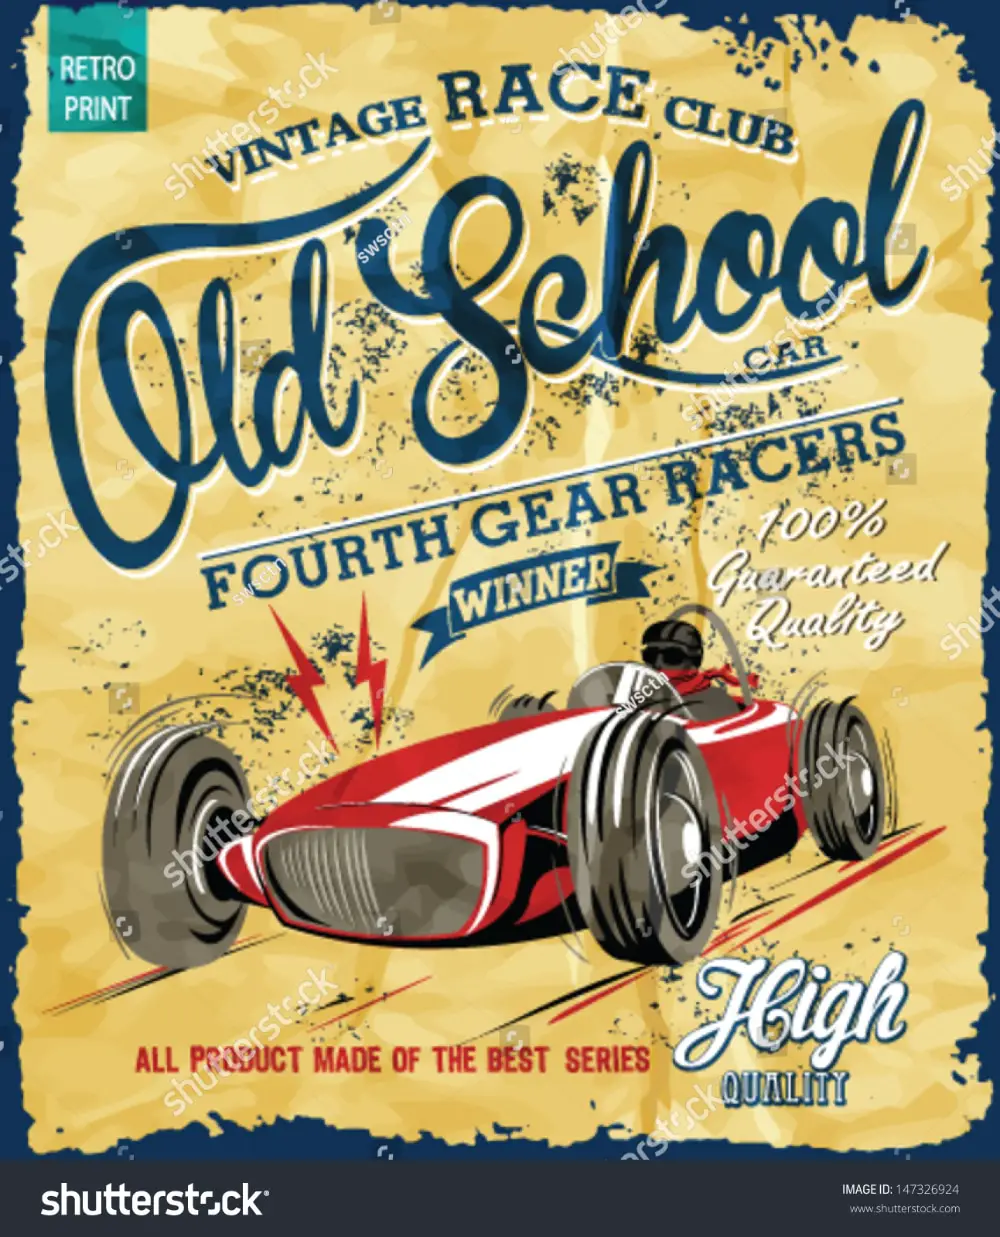 20 Free Retro & Vintage Vectors: Vintage Race Car Print Poster With "Old School" Text